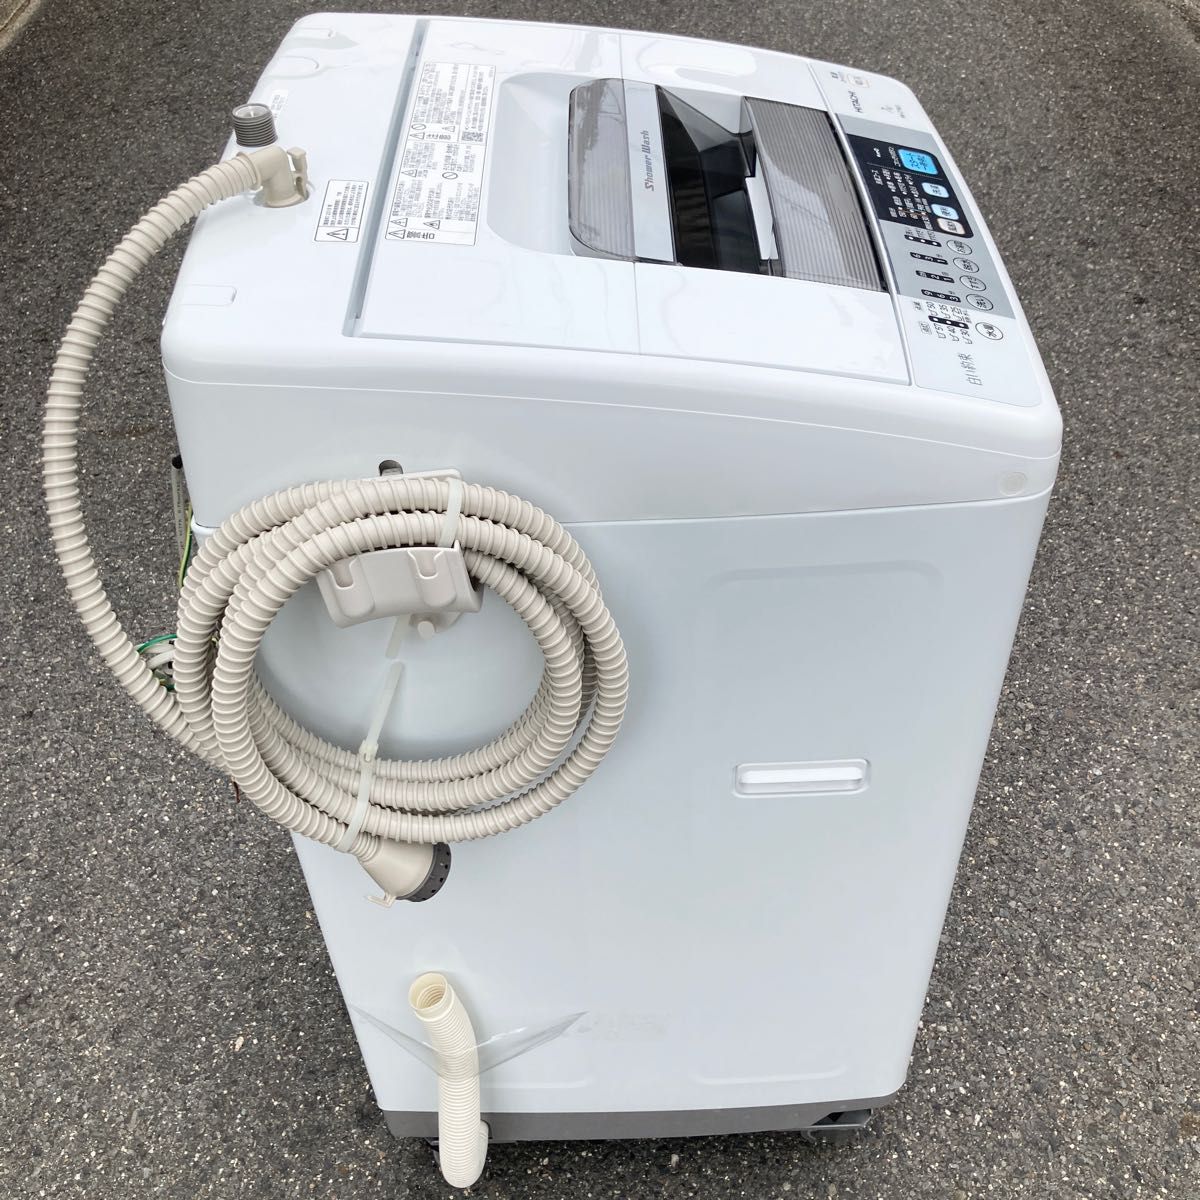 洗濯機 7kg 2016年製 HITACHI 白い約束 NW-Z79E3